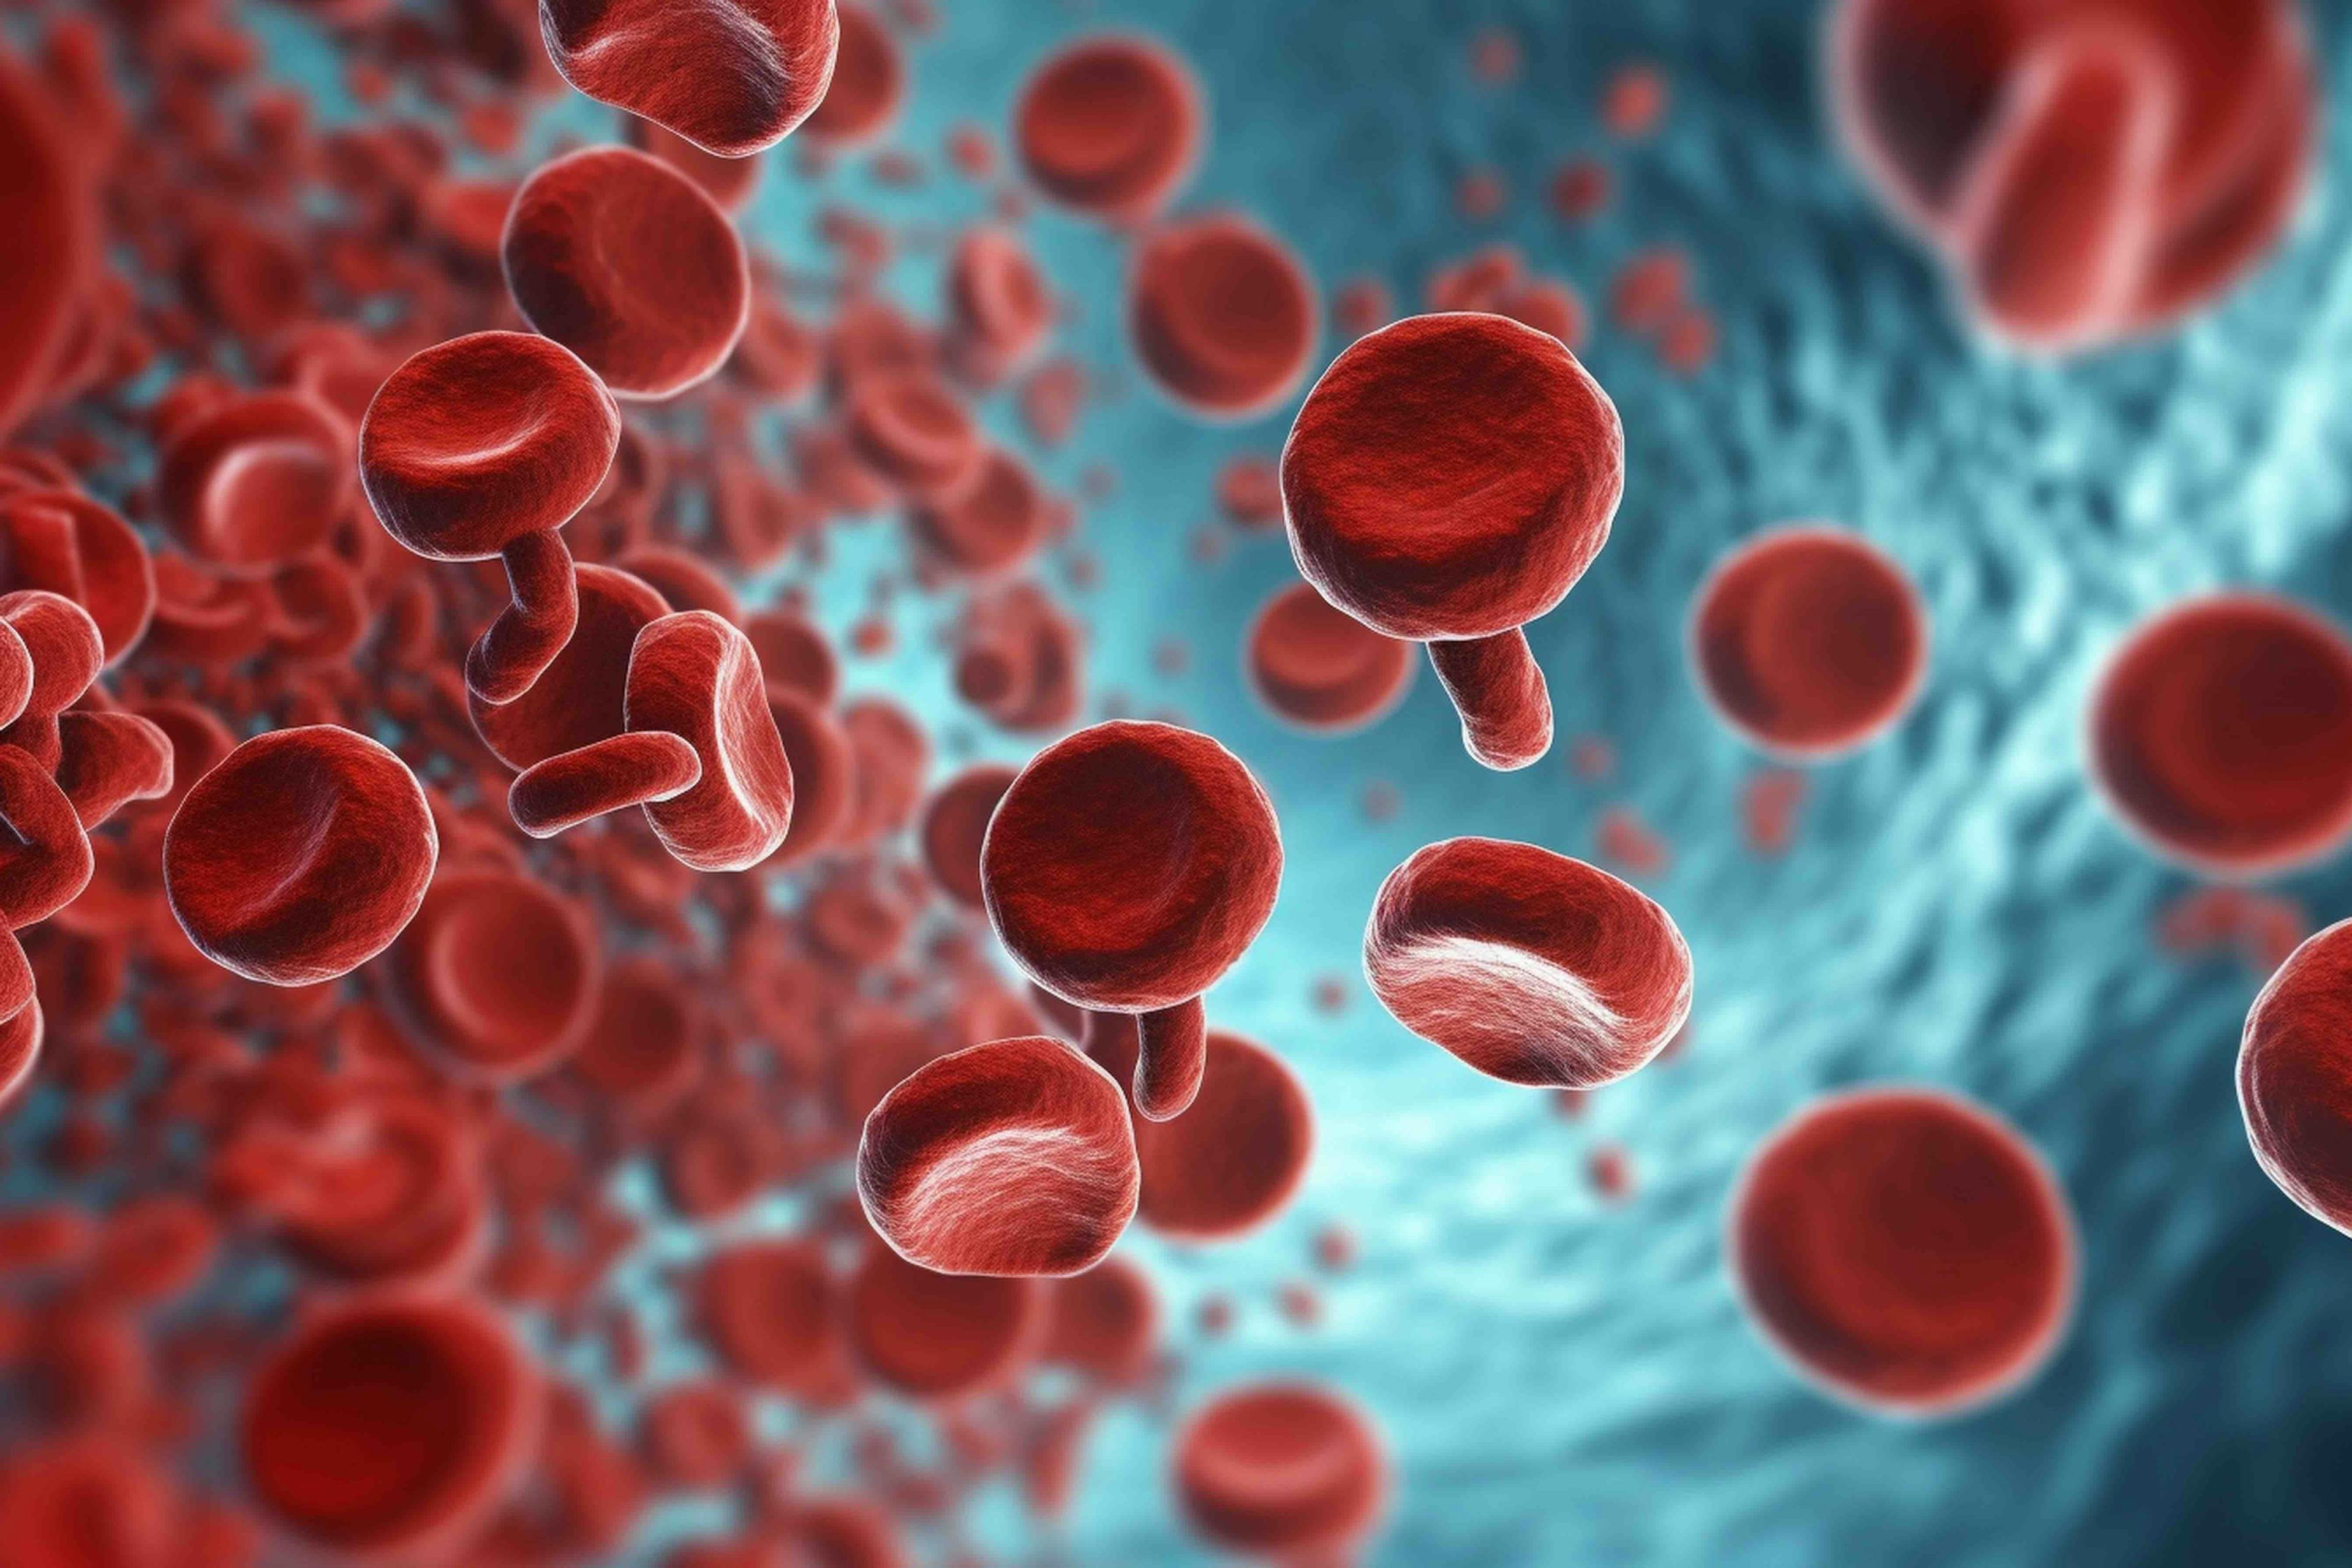 Blood cells flowing | Image credit: Катерина Євтехова - stock.adobe.com